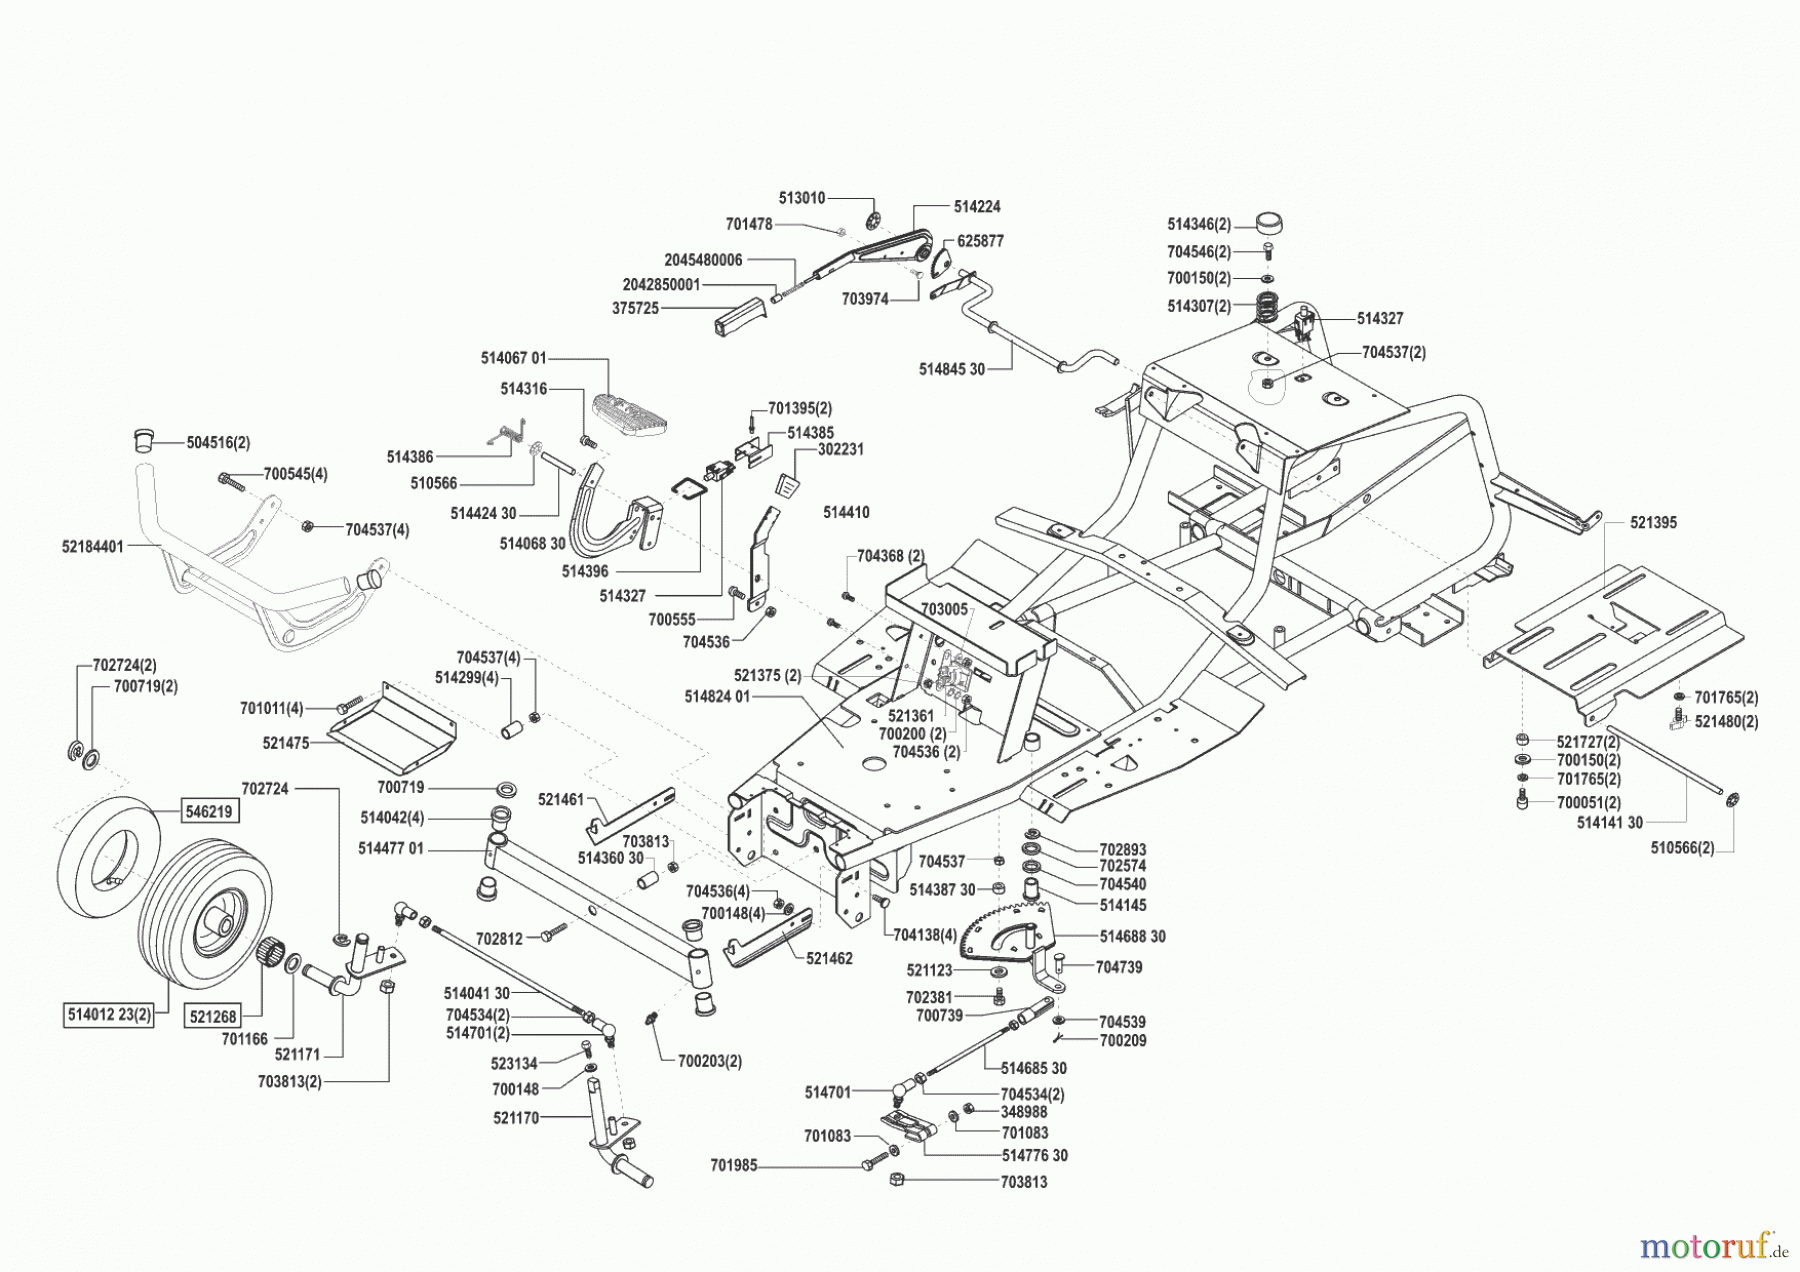  Sigma Gartentechnik Rasentraktor T18-102 SG  09/2002 Seite 2